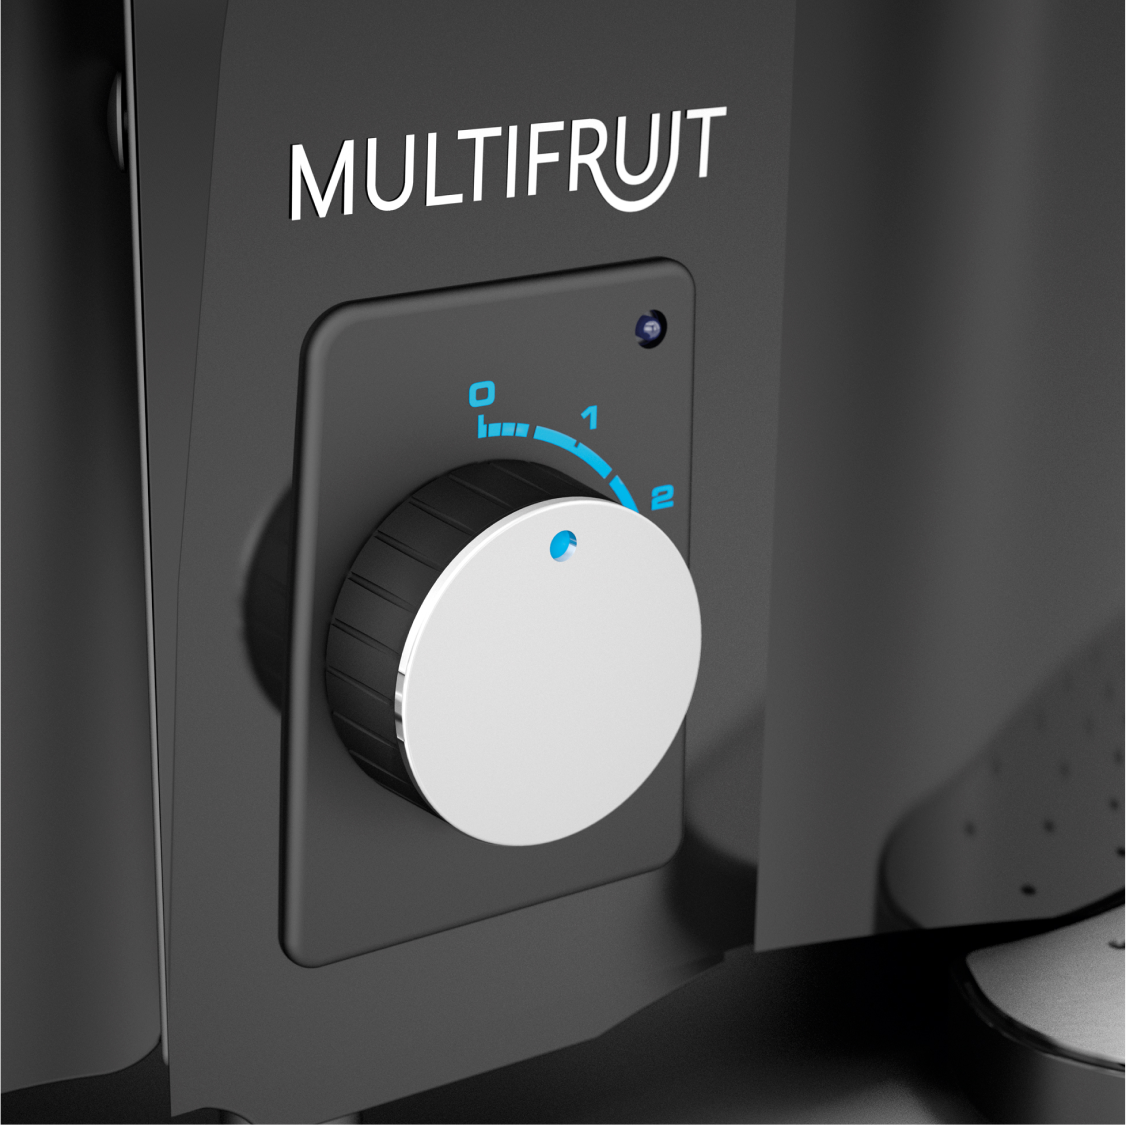 Multifruit button